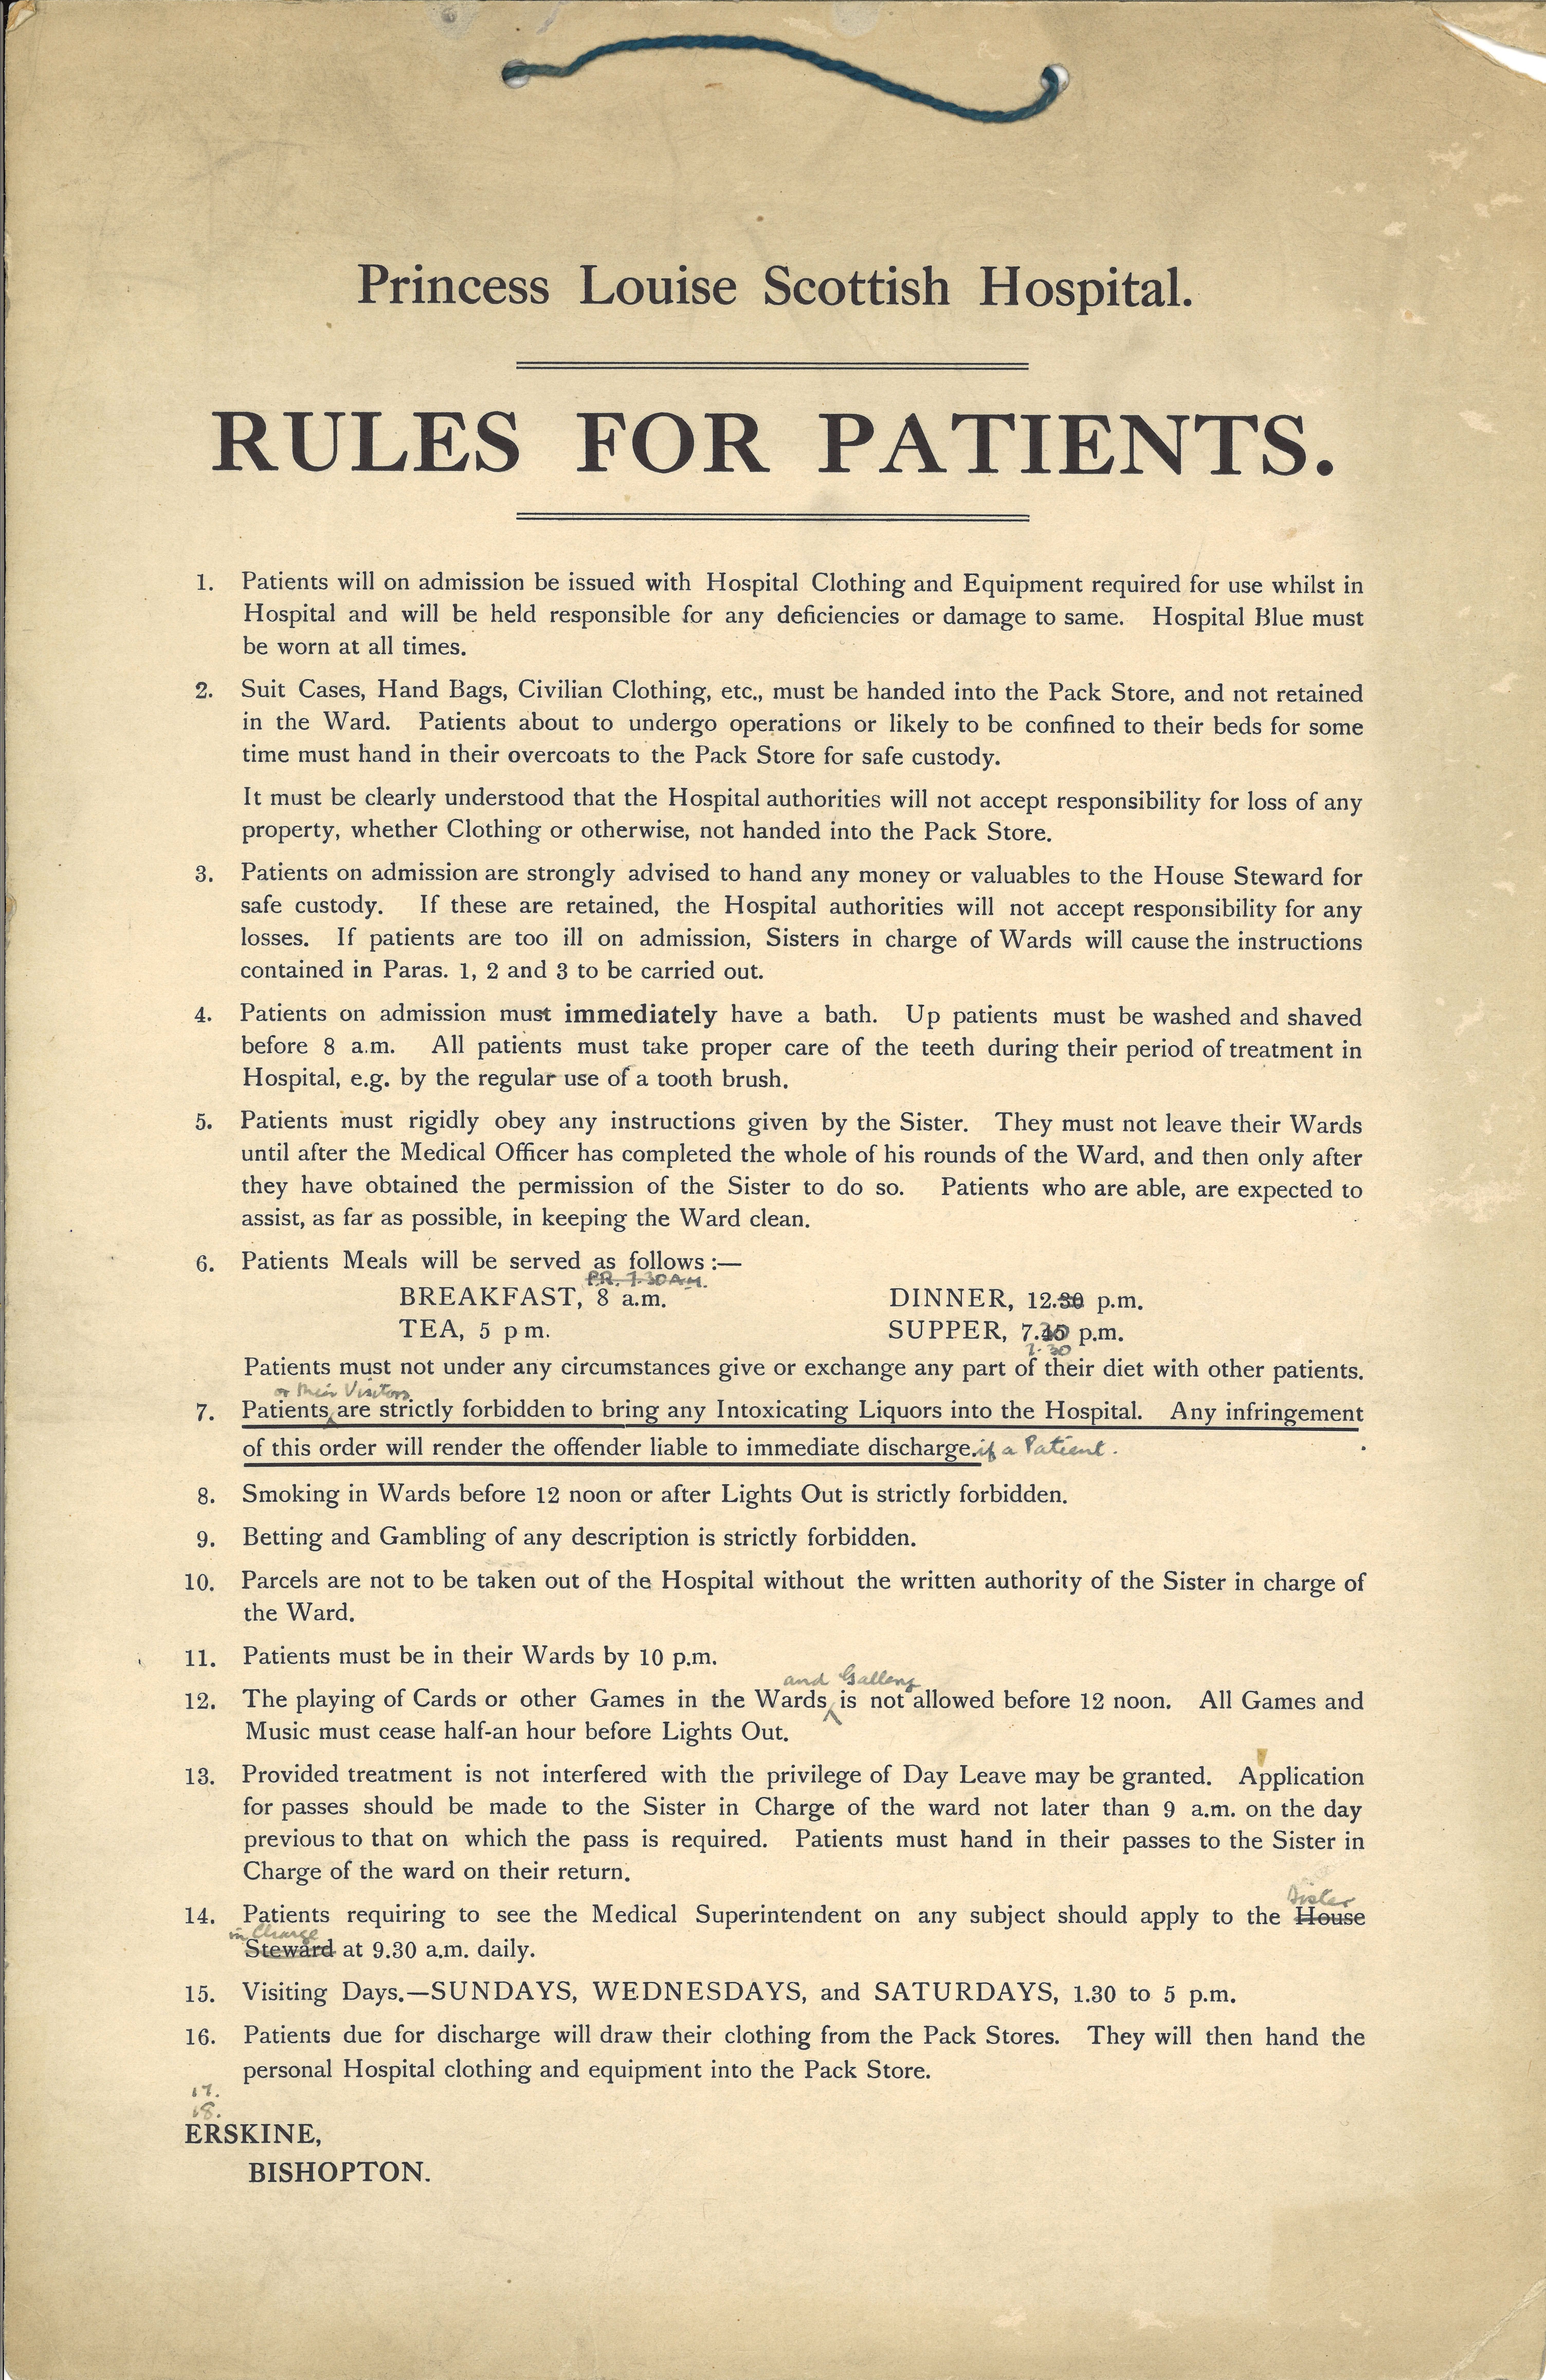 Erskine Hospital patient rules